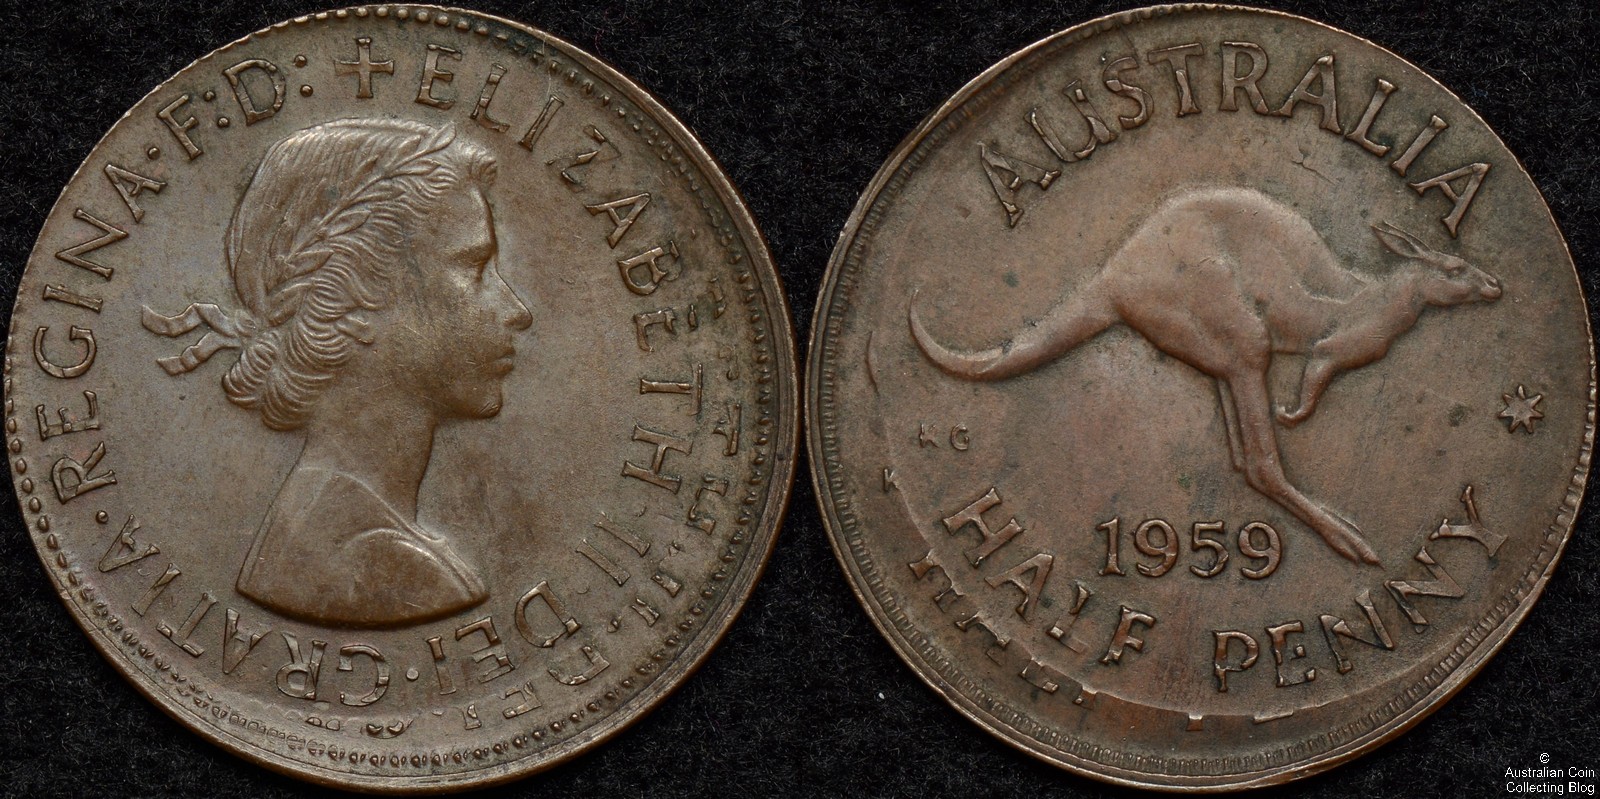 Double Struck 1959 Half Penny